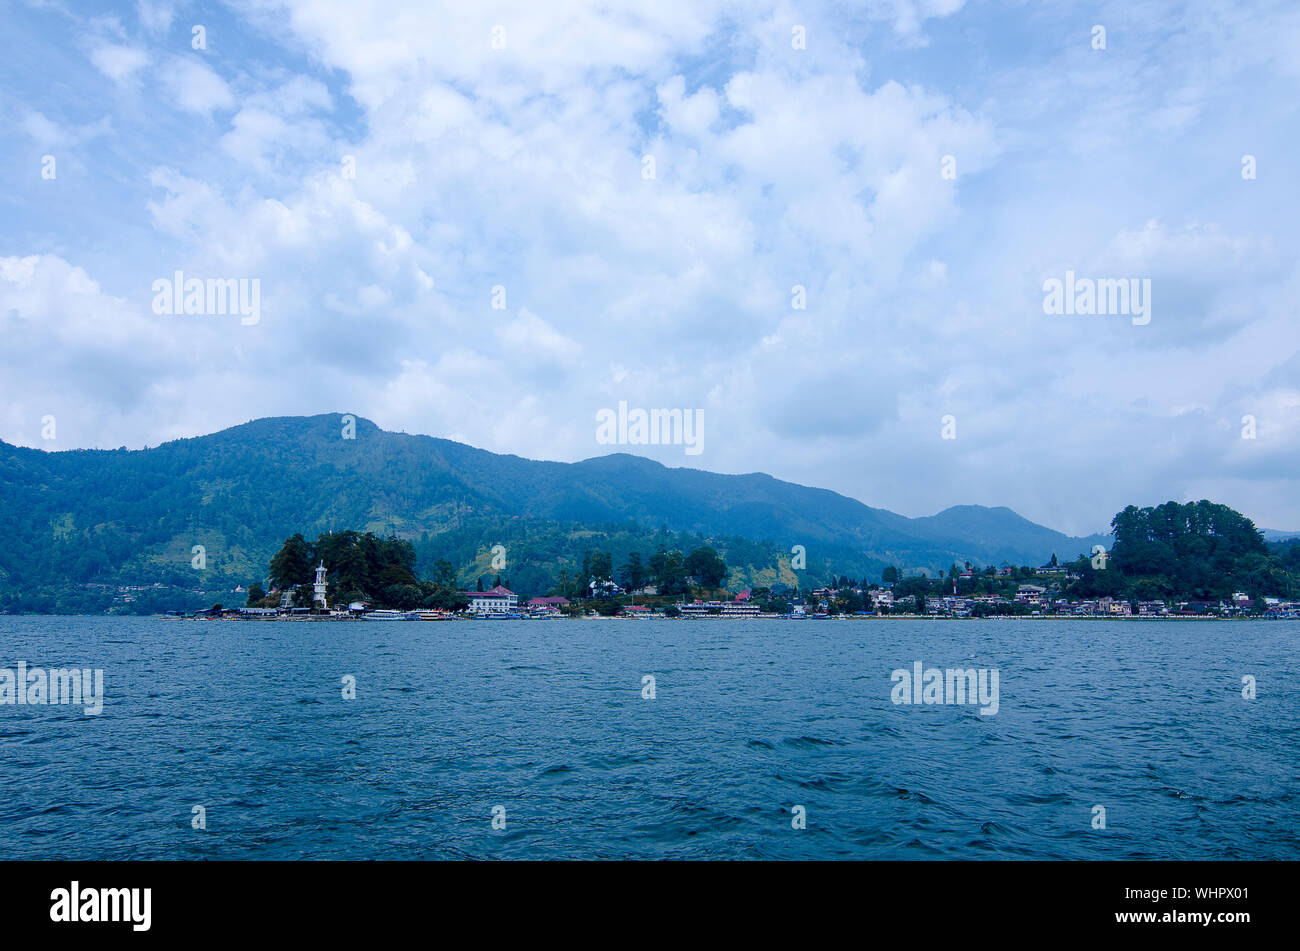 Panoramic view of Lake Toba in North Sumatra Indonesia Stock Photo